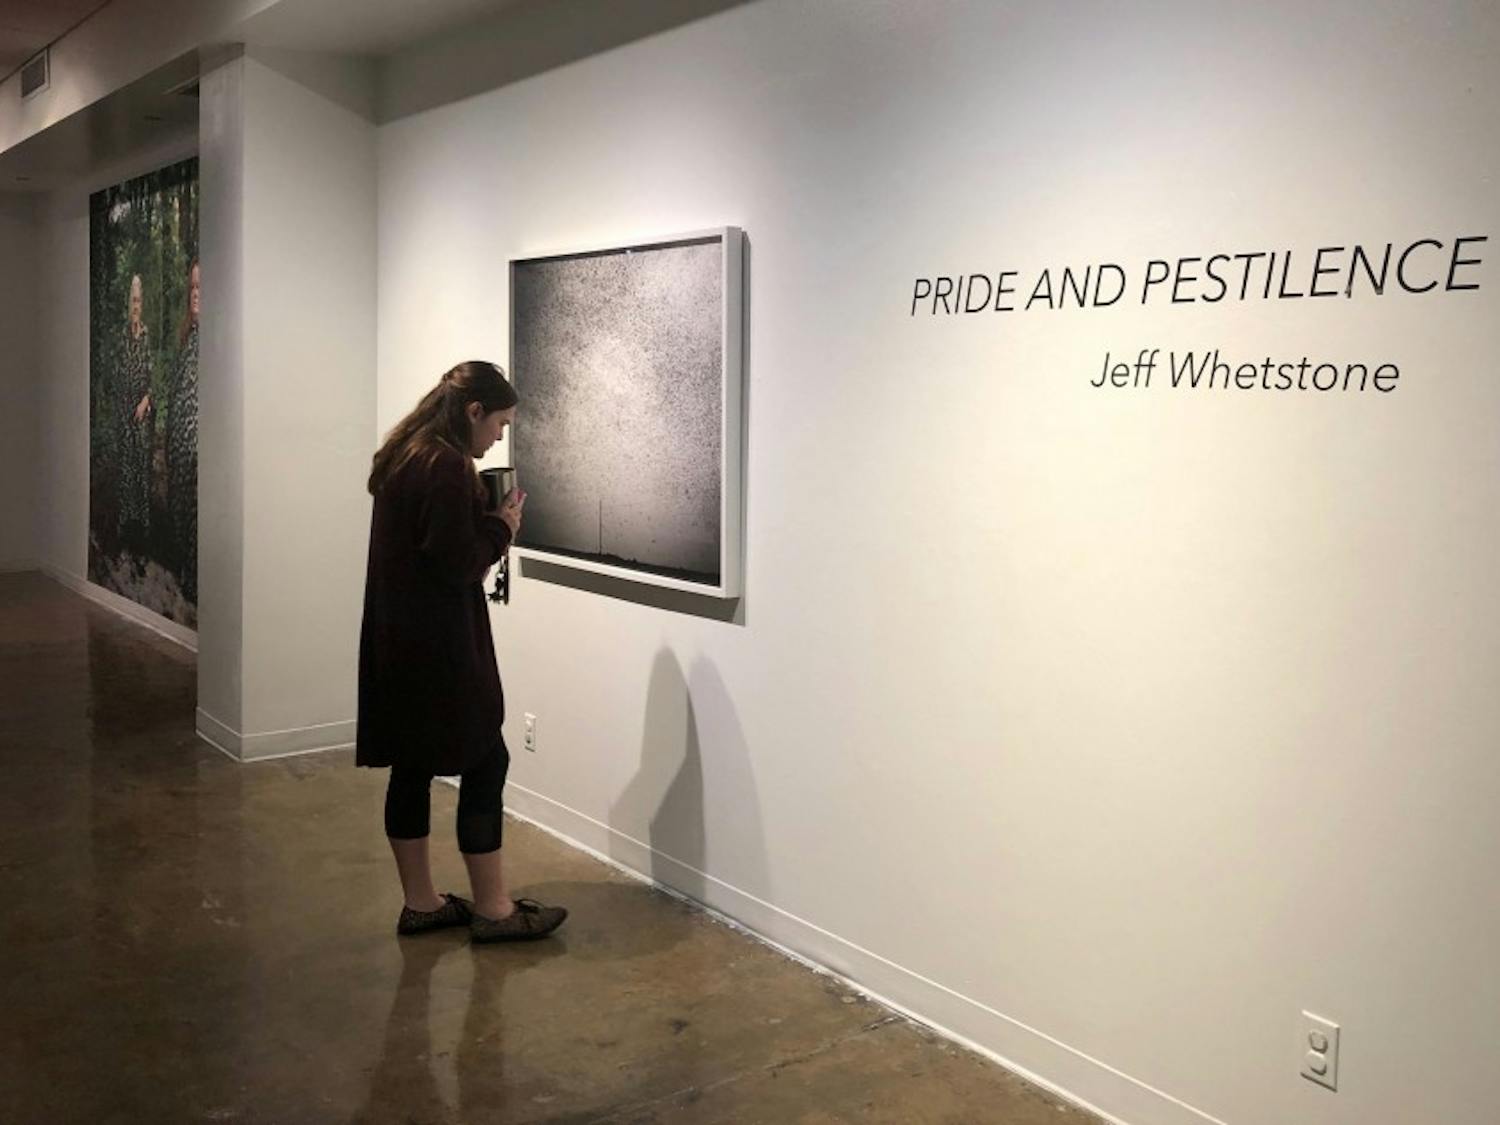 Auburn student views "Pride and Pestilence" by Jeff Whetstone on Thursday, Feb. 1, 2018 in Auburn, Ala.